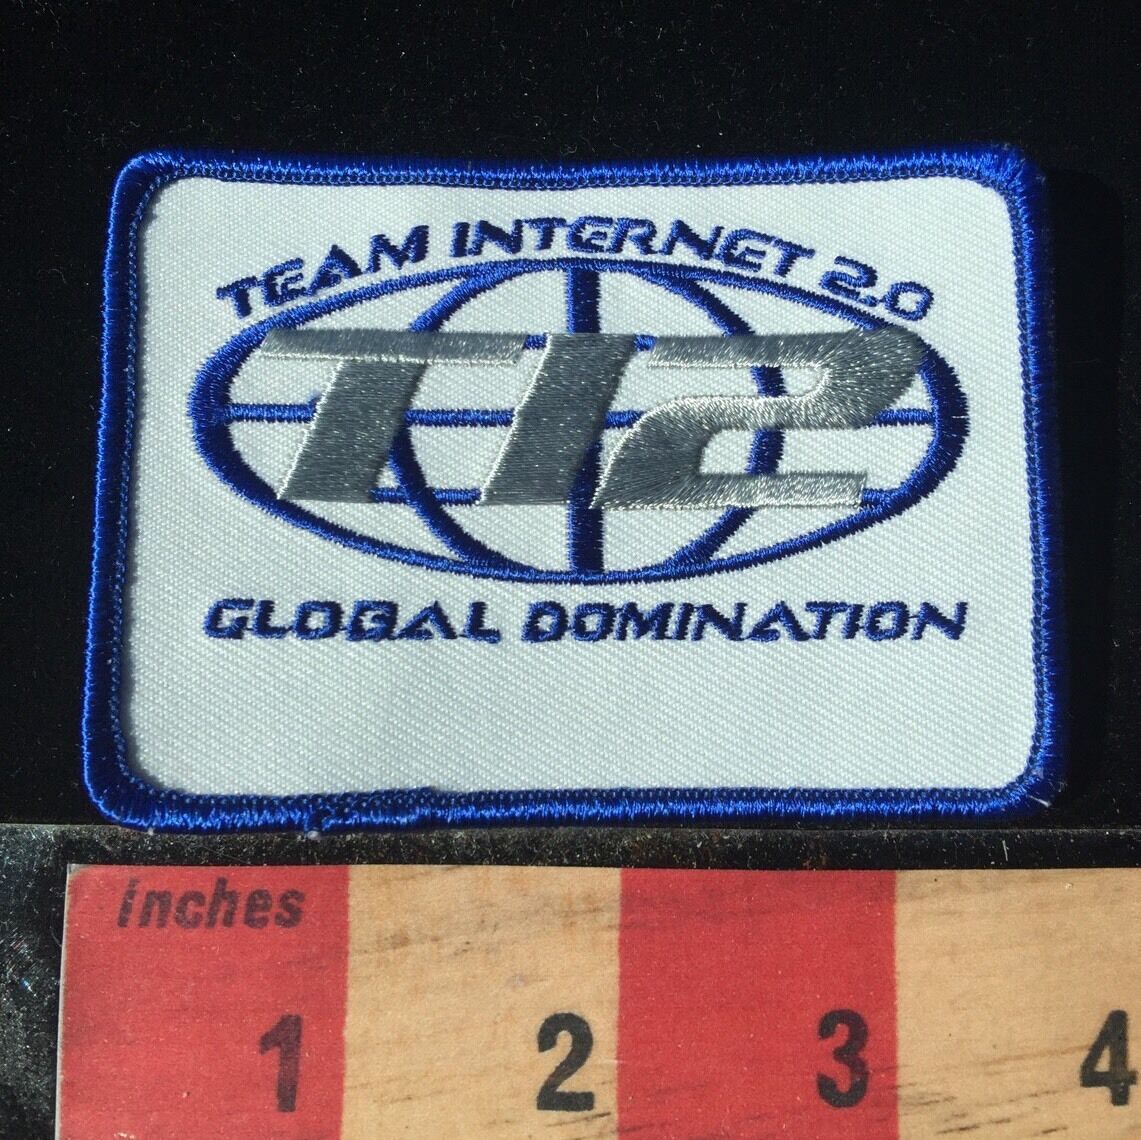 TI2 TEAM INTERNET 2.0 GLOBAL DOMINATION Shirt / Jacket Patch ~ Advertising 66WB